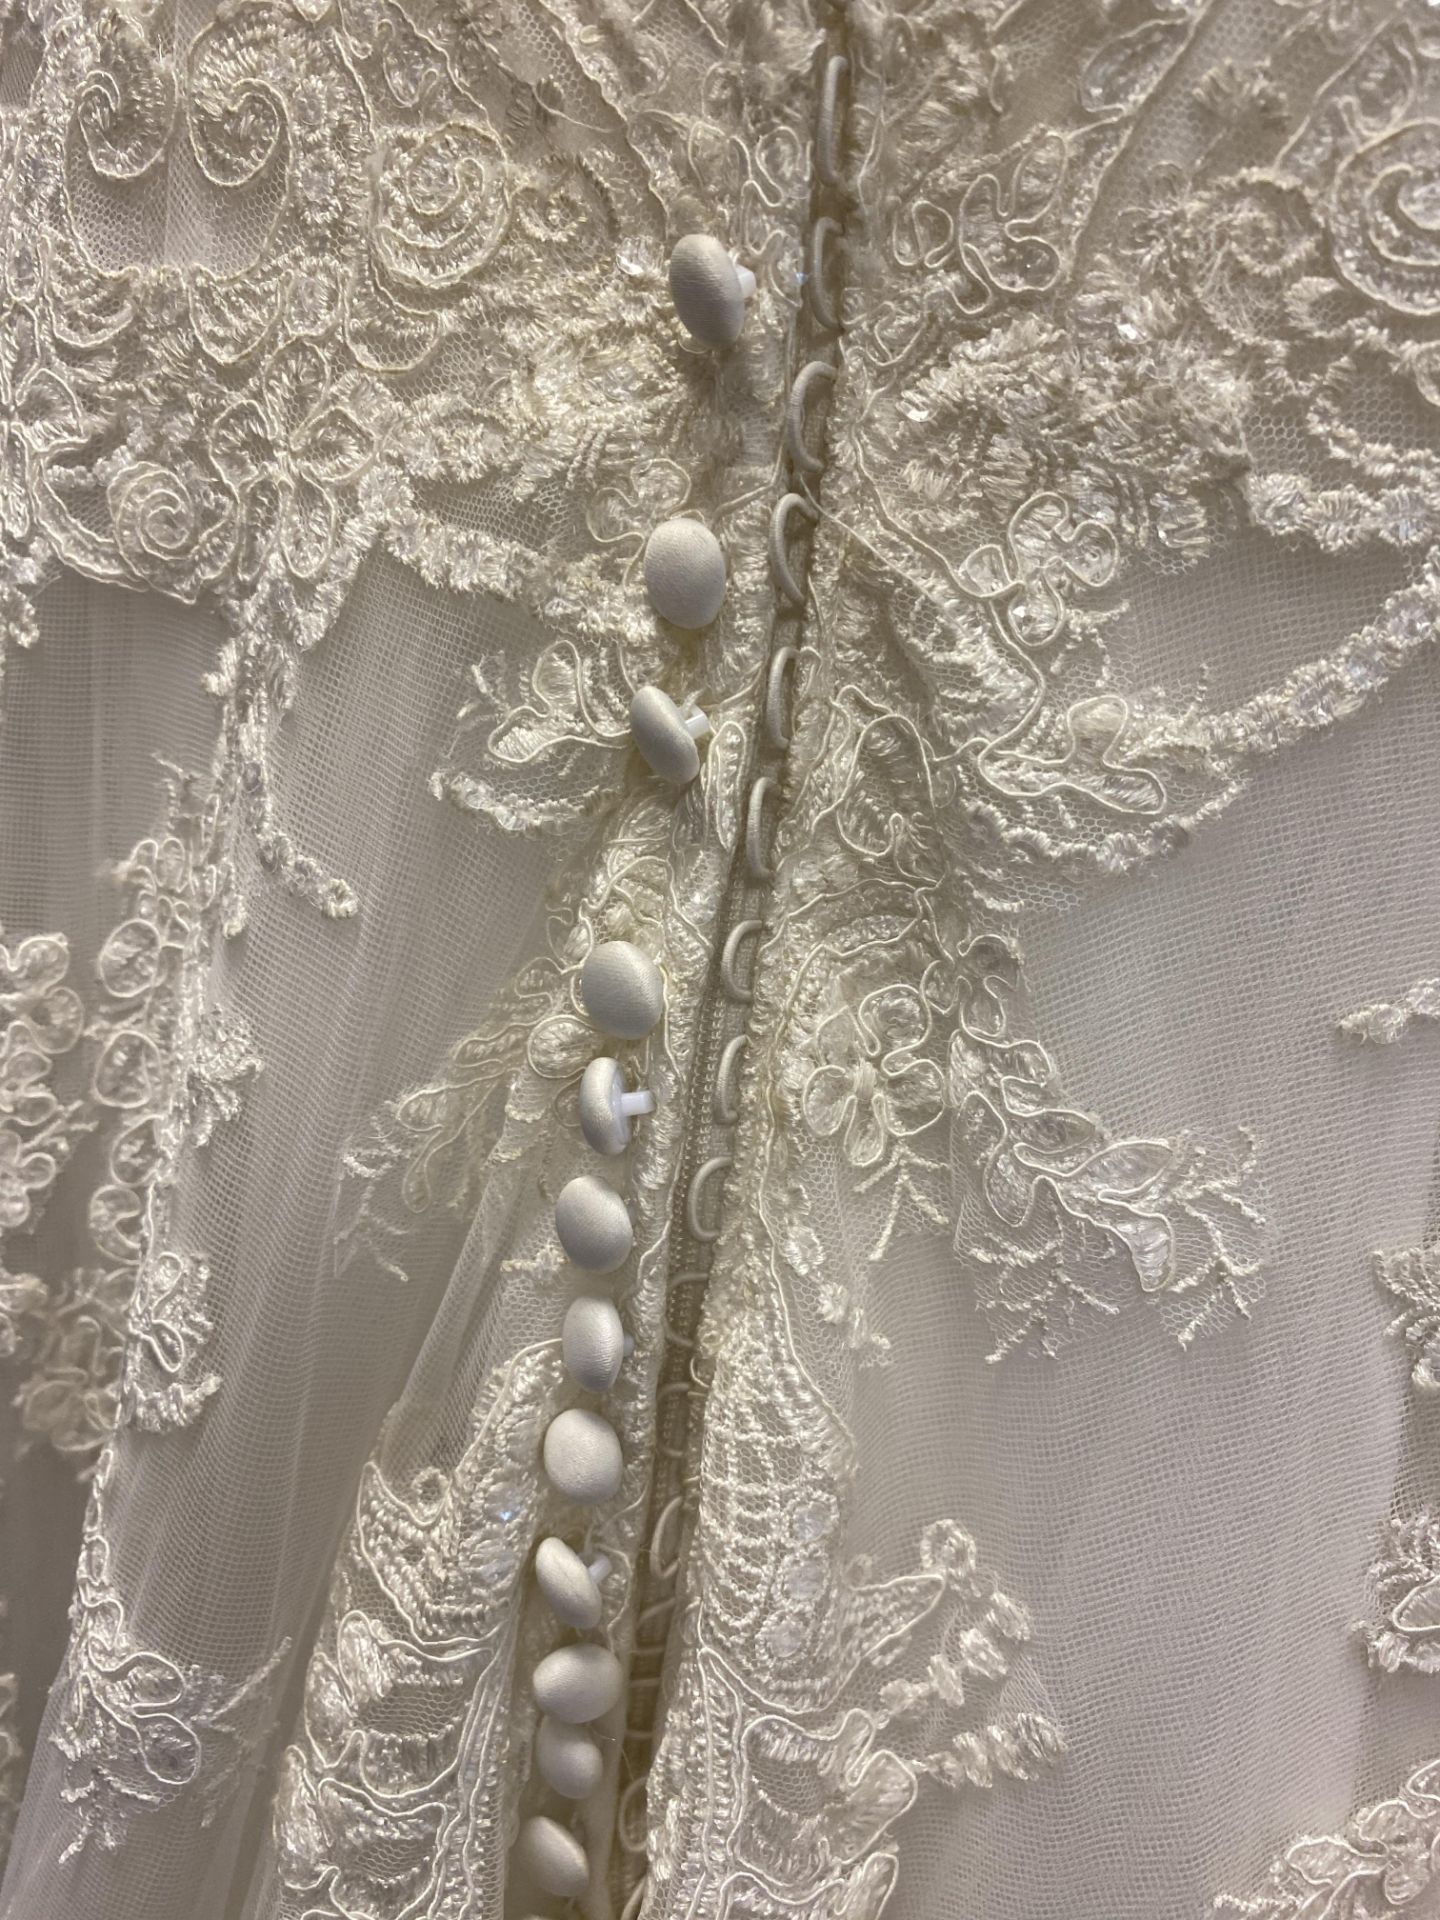 1 x MORI LEE '2787' Stunning Strapless Lace And Chiffon Designer Wedding Dress RRP £1,200 UK 12 - Image 4 of 12